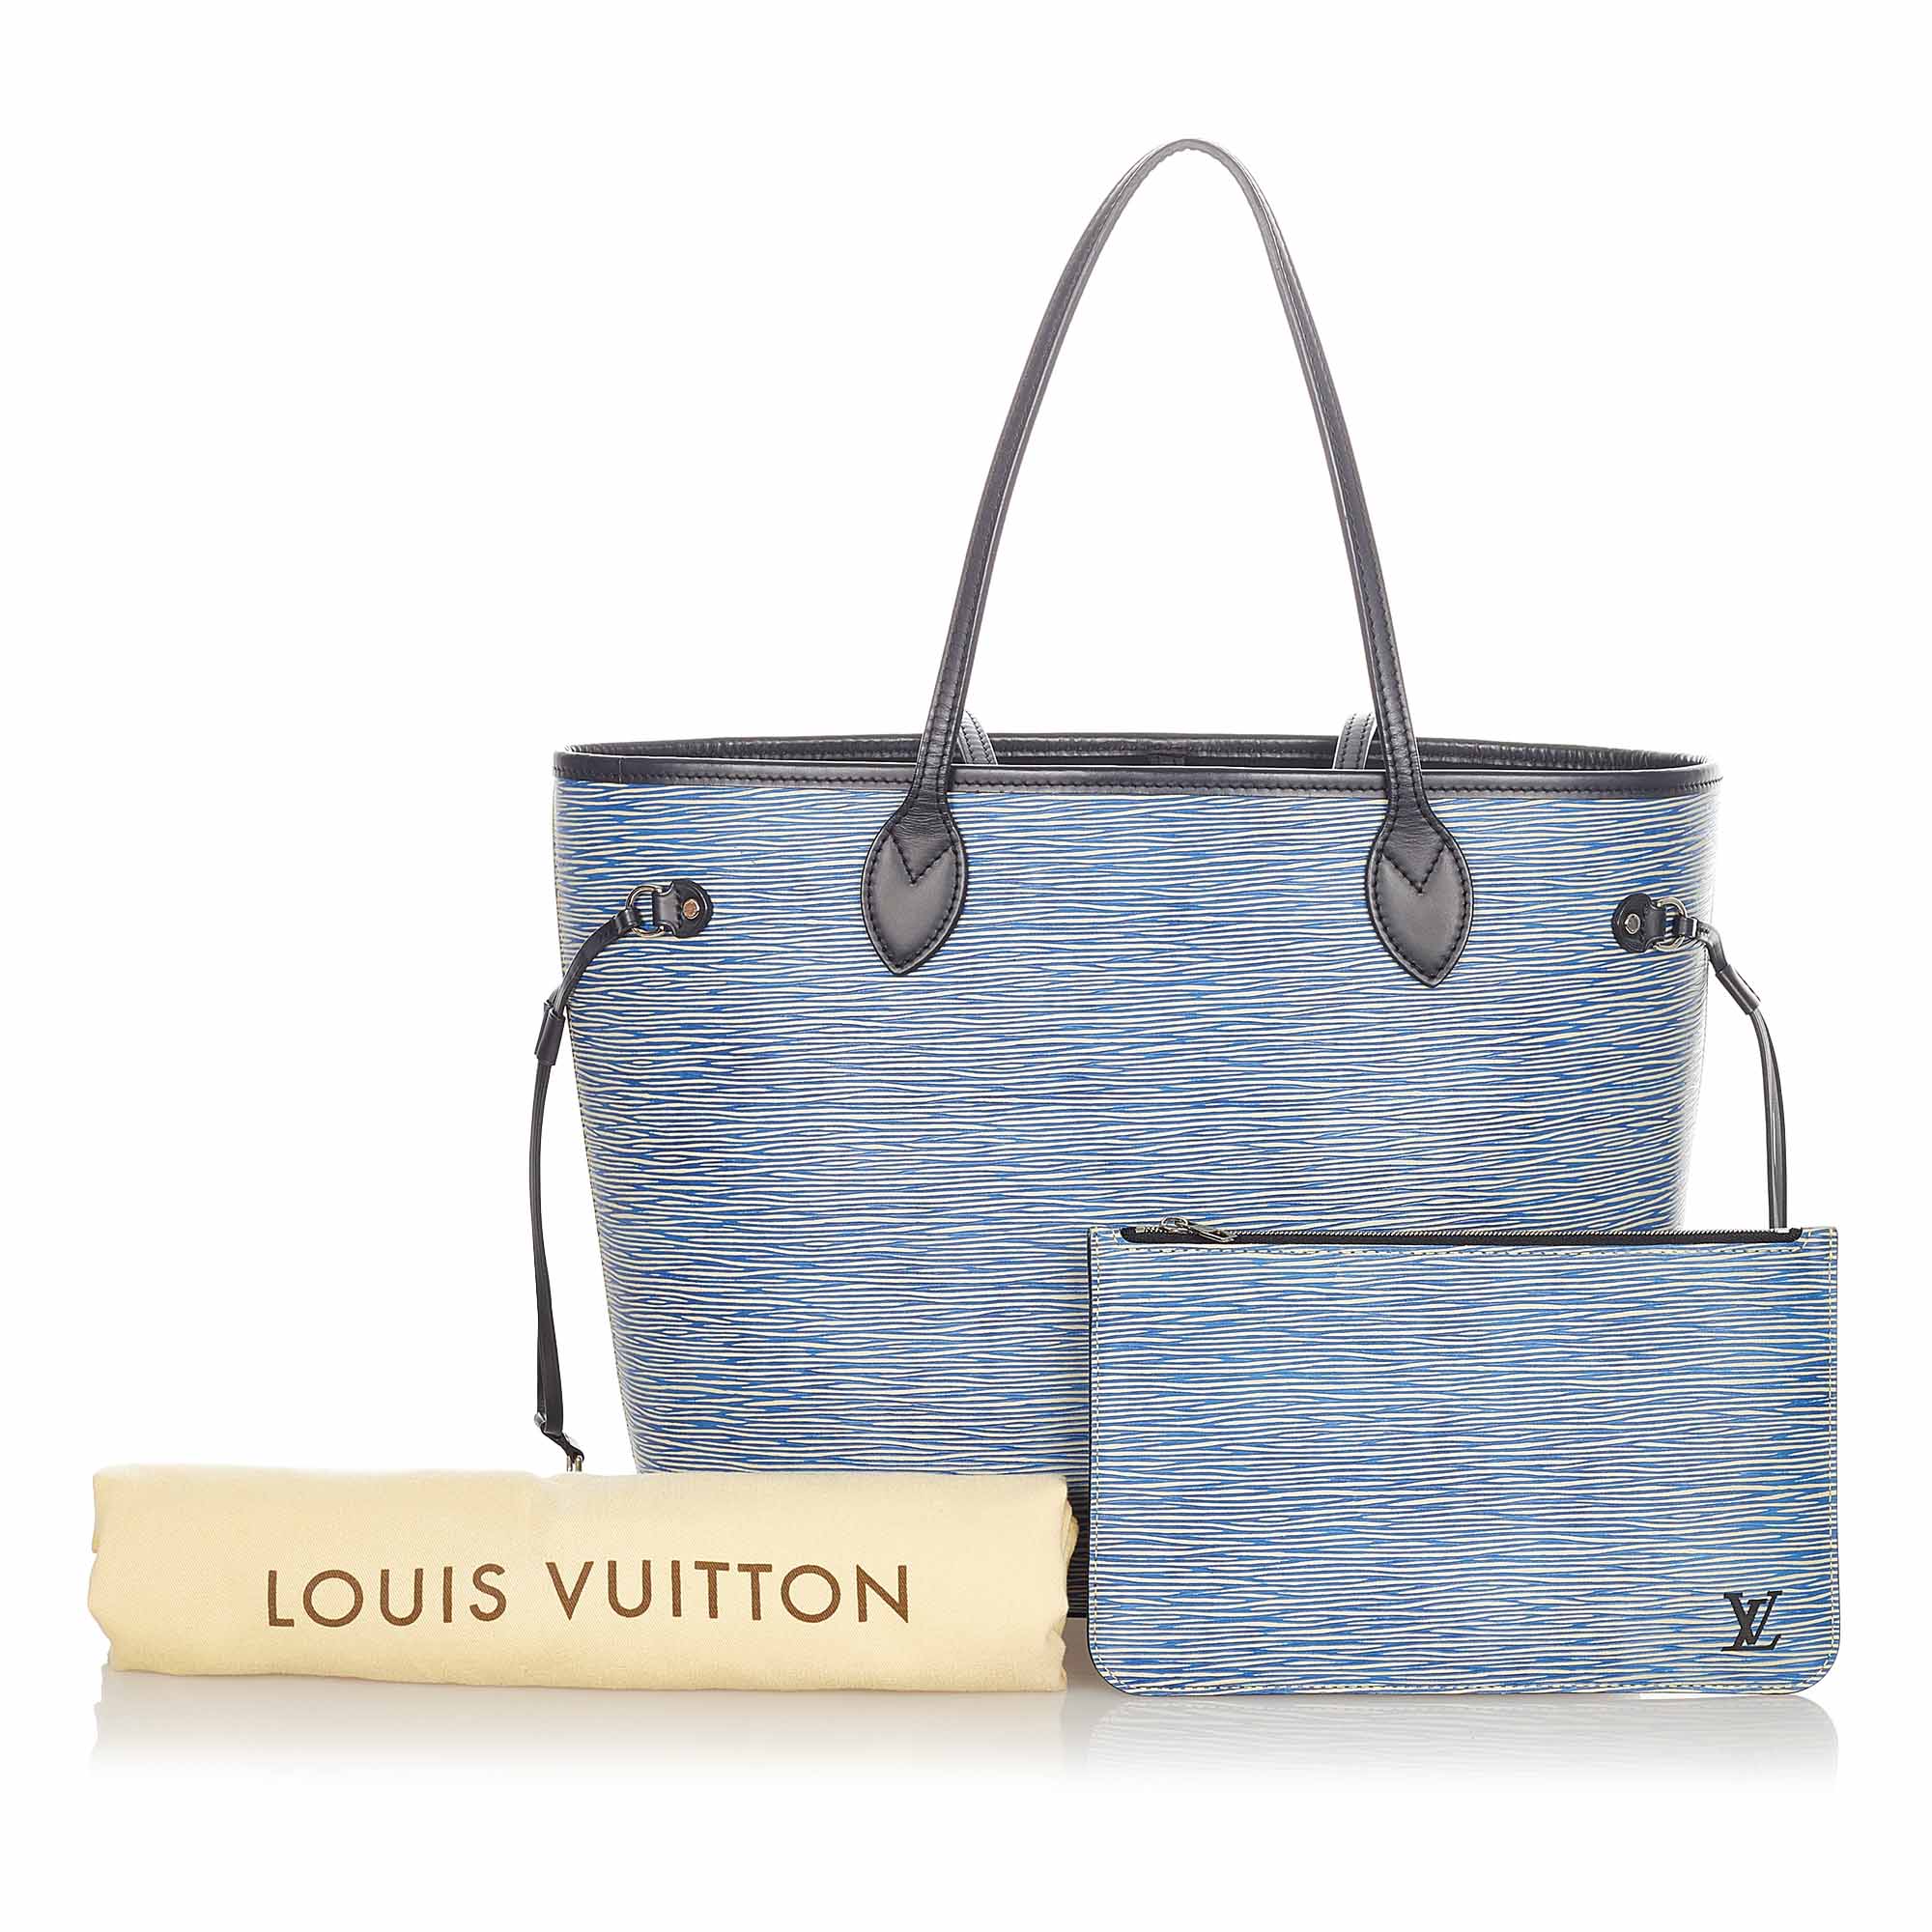 LOUIS VUITTON Neverfull MM Epi Leather Tote Shoulder Bag Blue